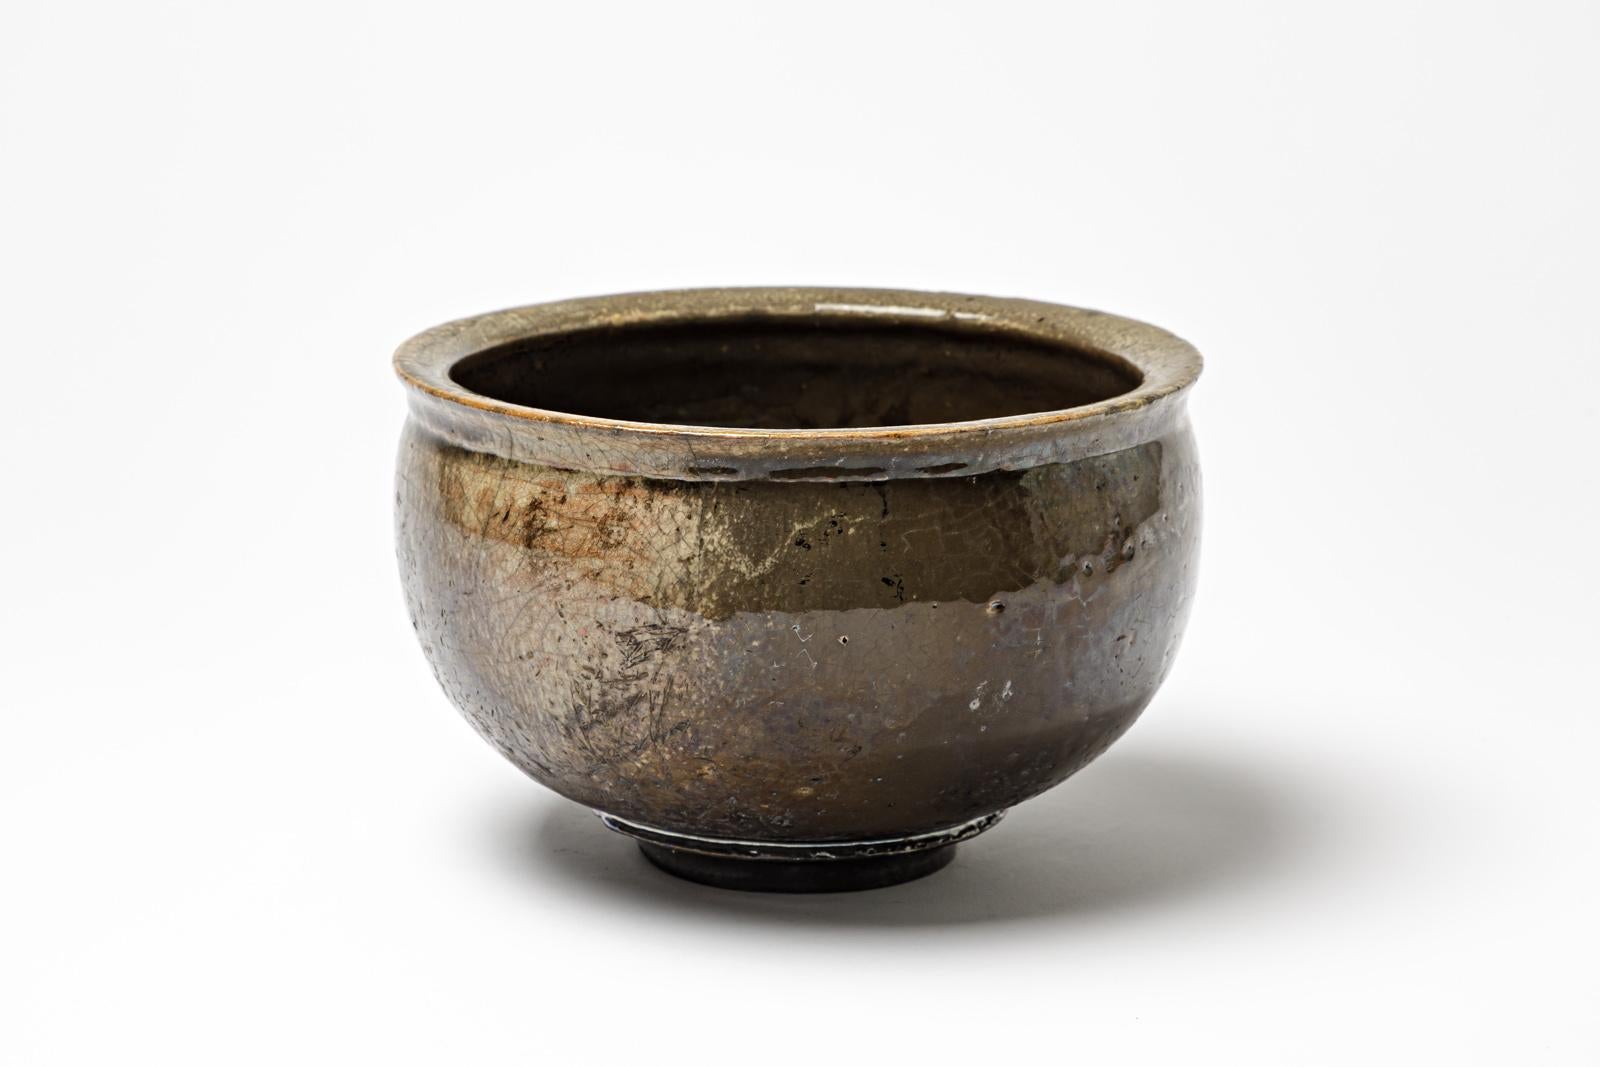 Brown glazed ceramic cup by Gisèle Buthod Garçon.
Raku fired. Artist monogram under the base. Vers 1980-1990. 
H : 5.1’ x 7.9’ inches.